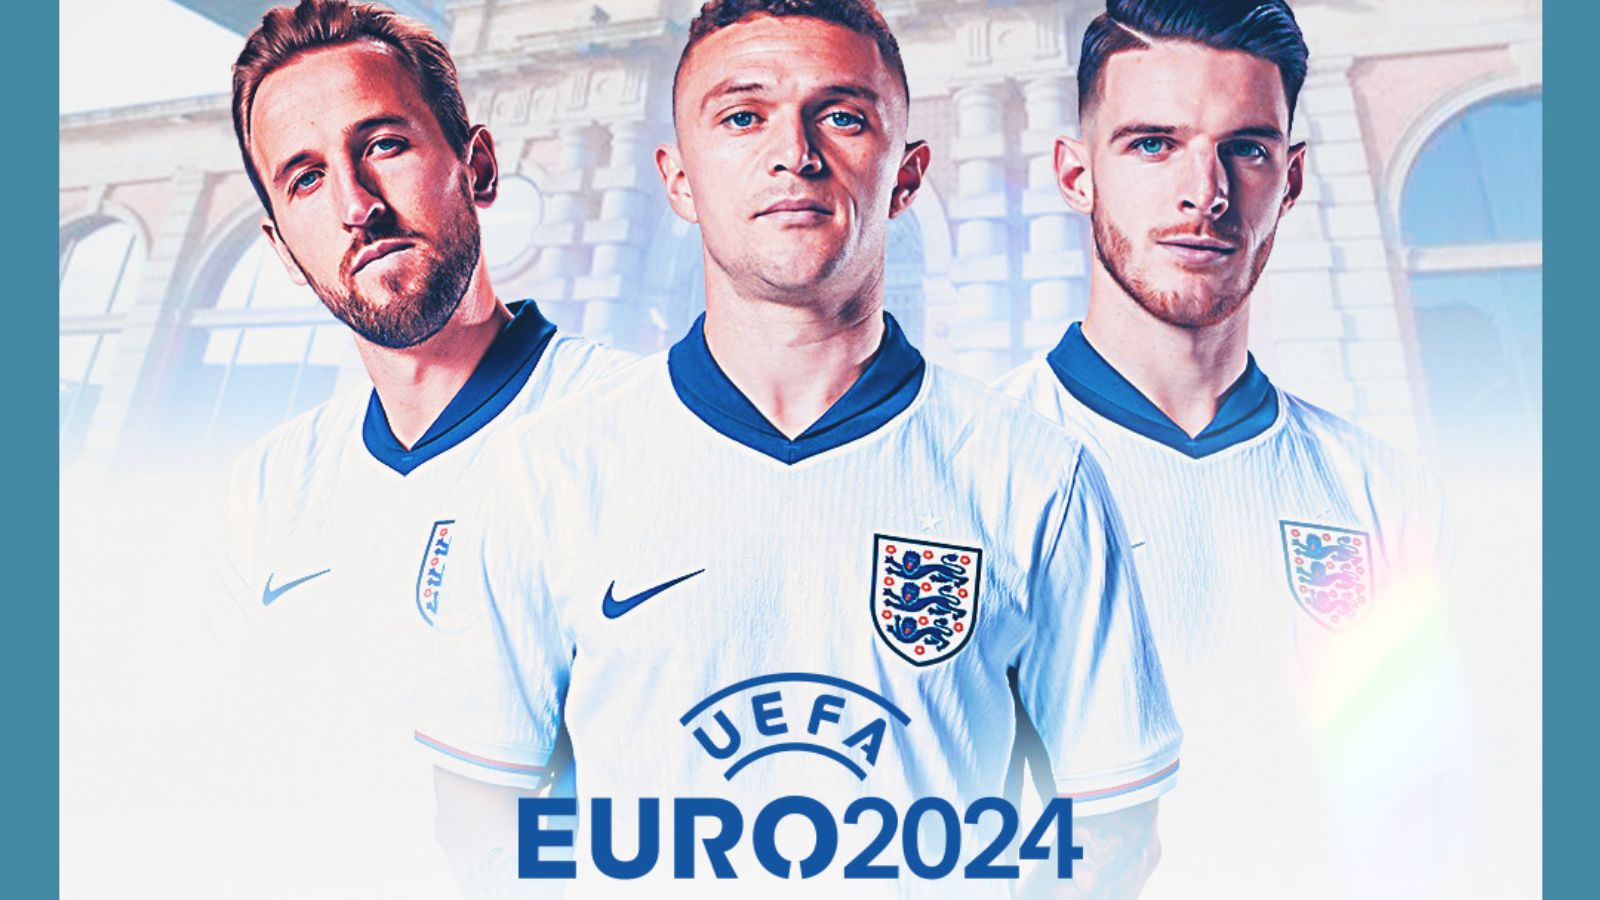 Euros 2024 Fan Zone – England v Slovenia @ Riverside